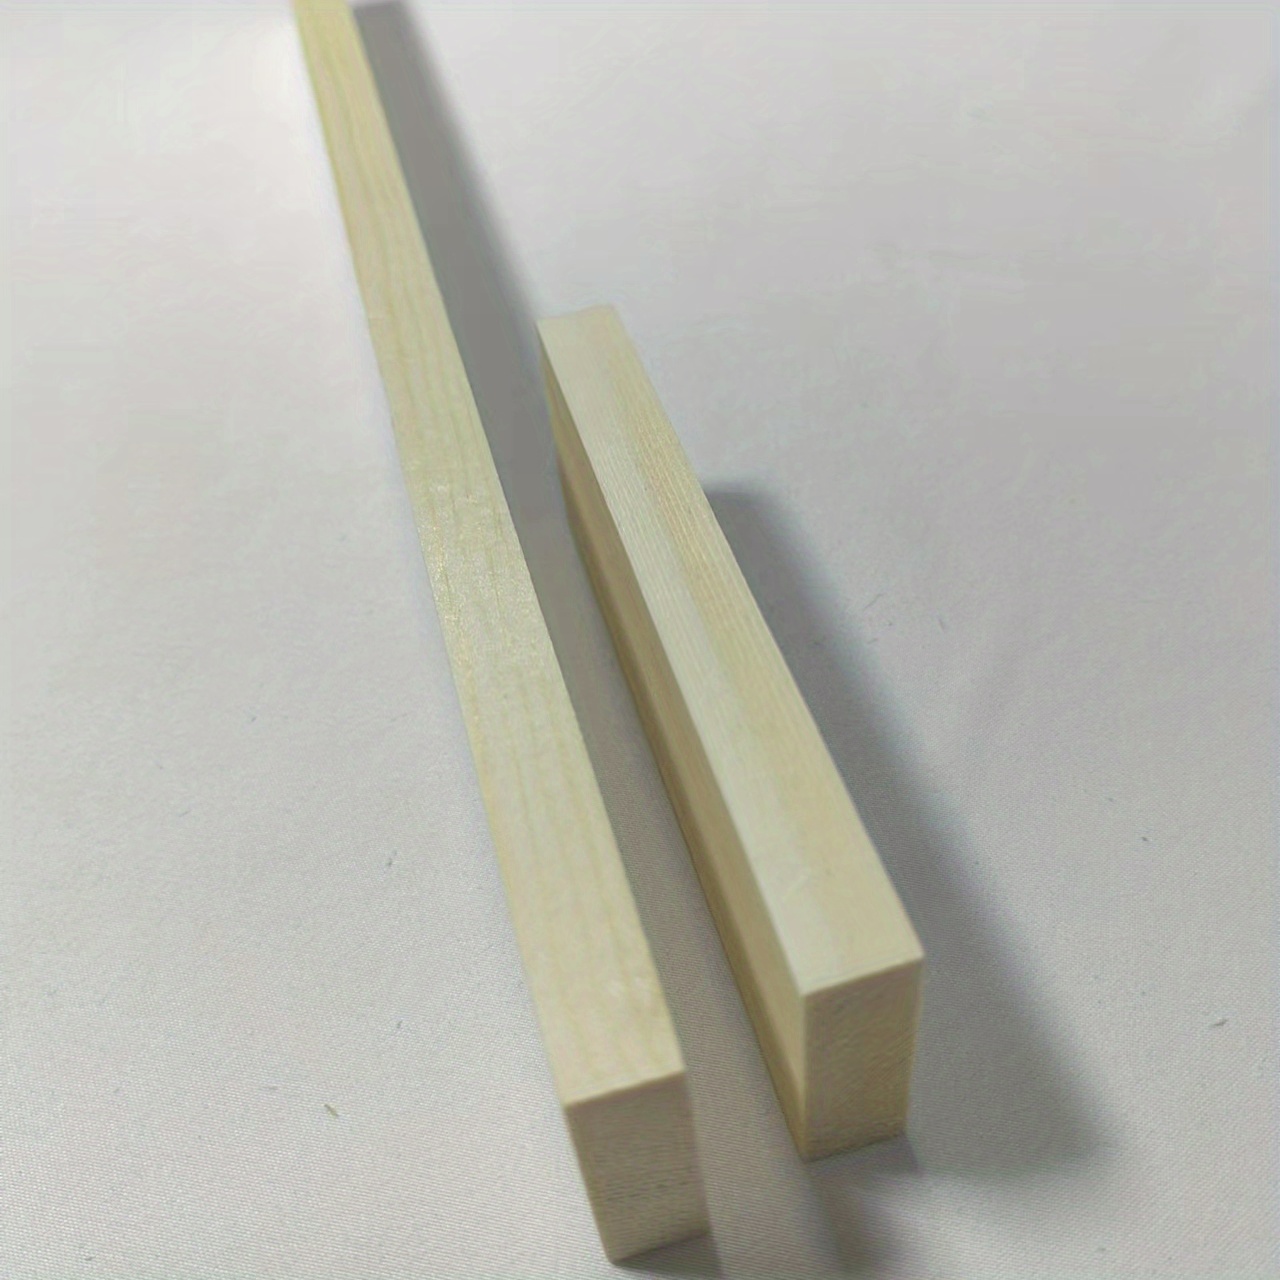 10Pcs Wooden Dowel Rods for Craft, 4MM × 30cm/11.8in Dowel Rods Wood Sticks  Wooden Dowel Rod Unfinished Natural Wood Craft Dowel Sticks for Arts, DIY